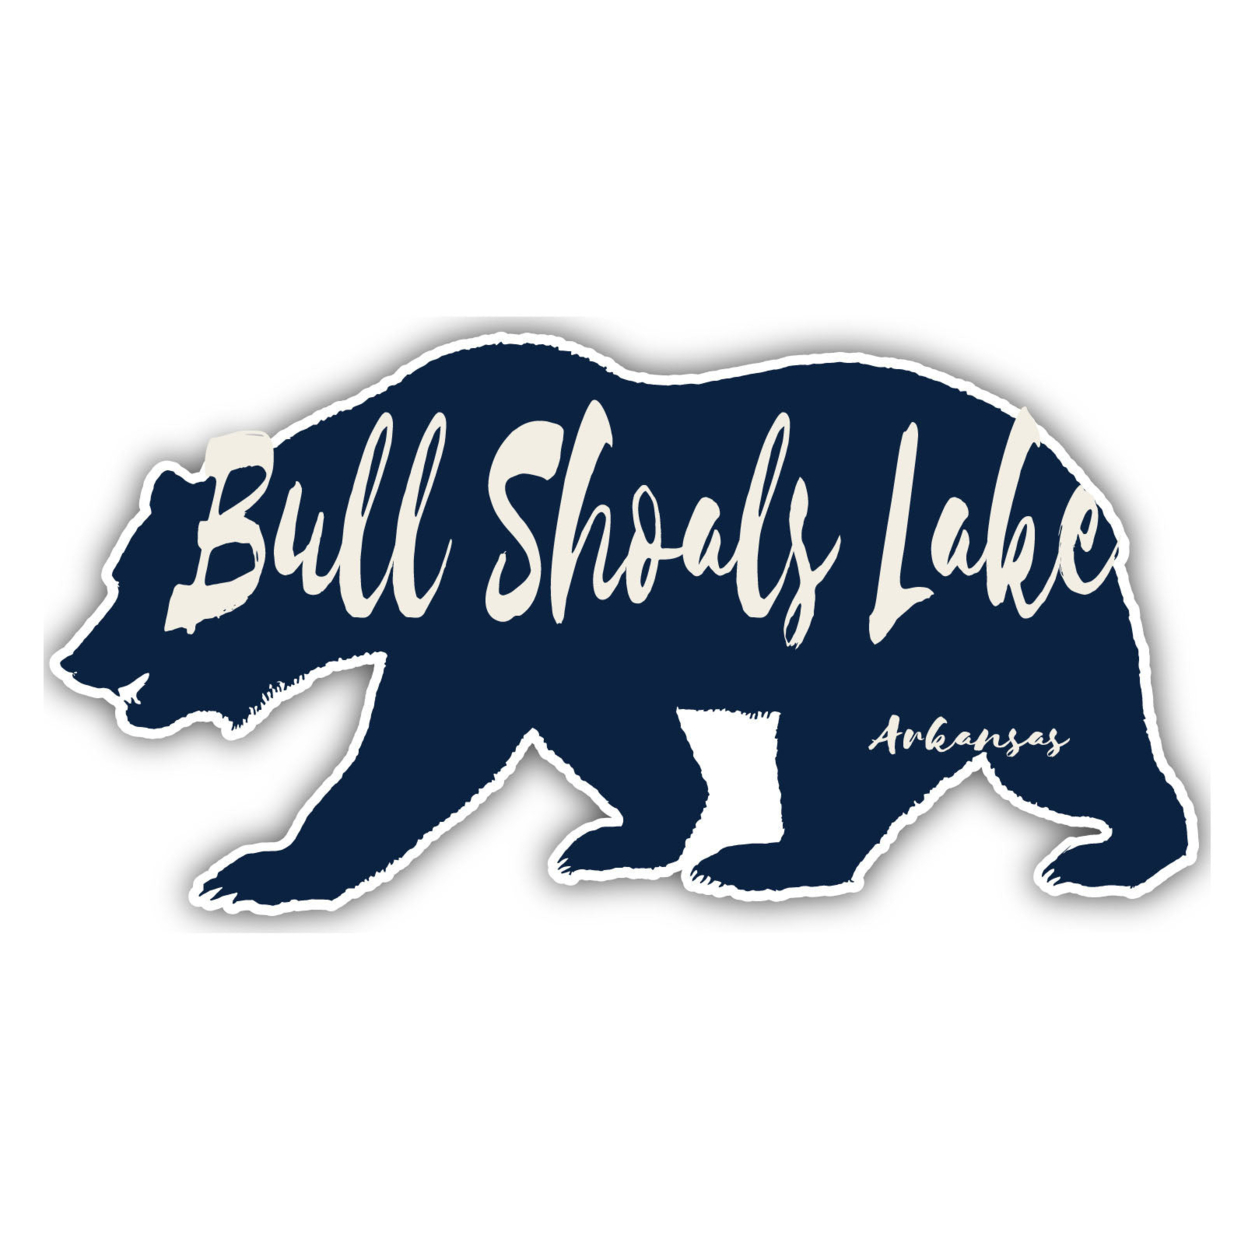 Bull Shoals Lake Arkansas Souvenir Decorative Stickers (Choose Theme And Size) - 4-Pack, 6-Inch, Tent